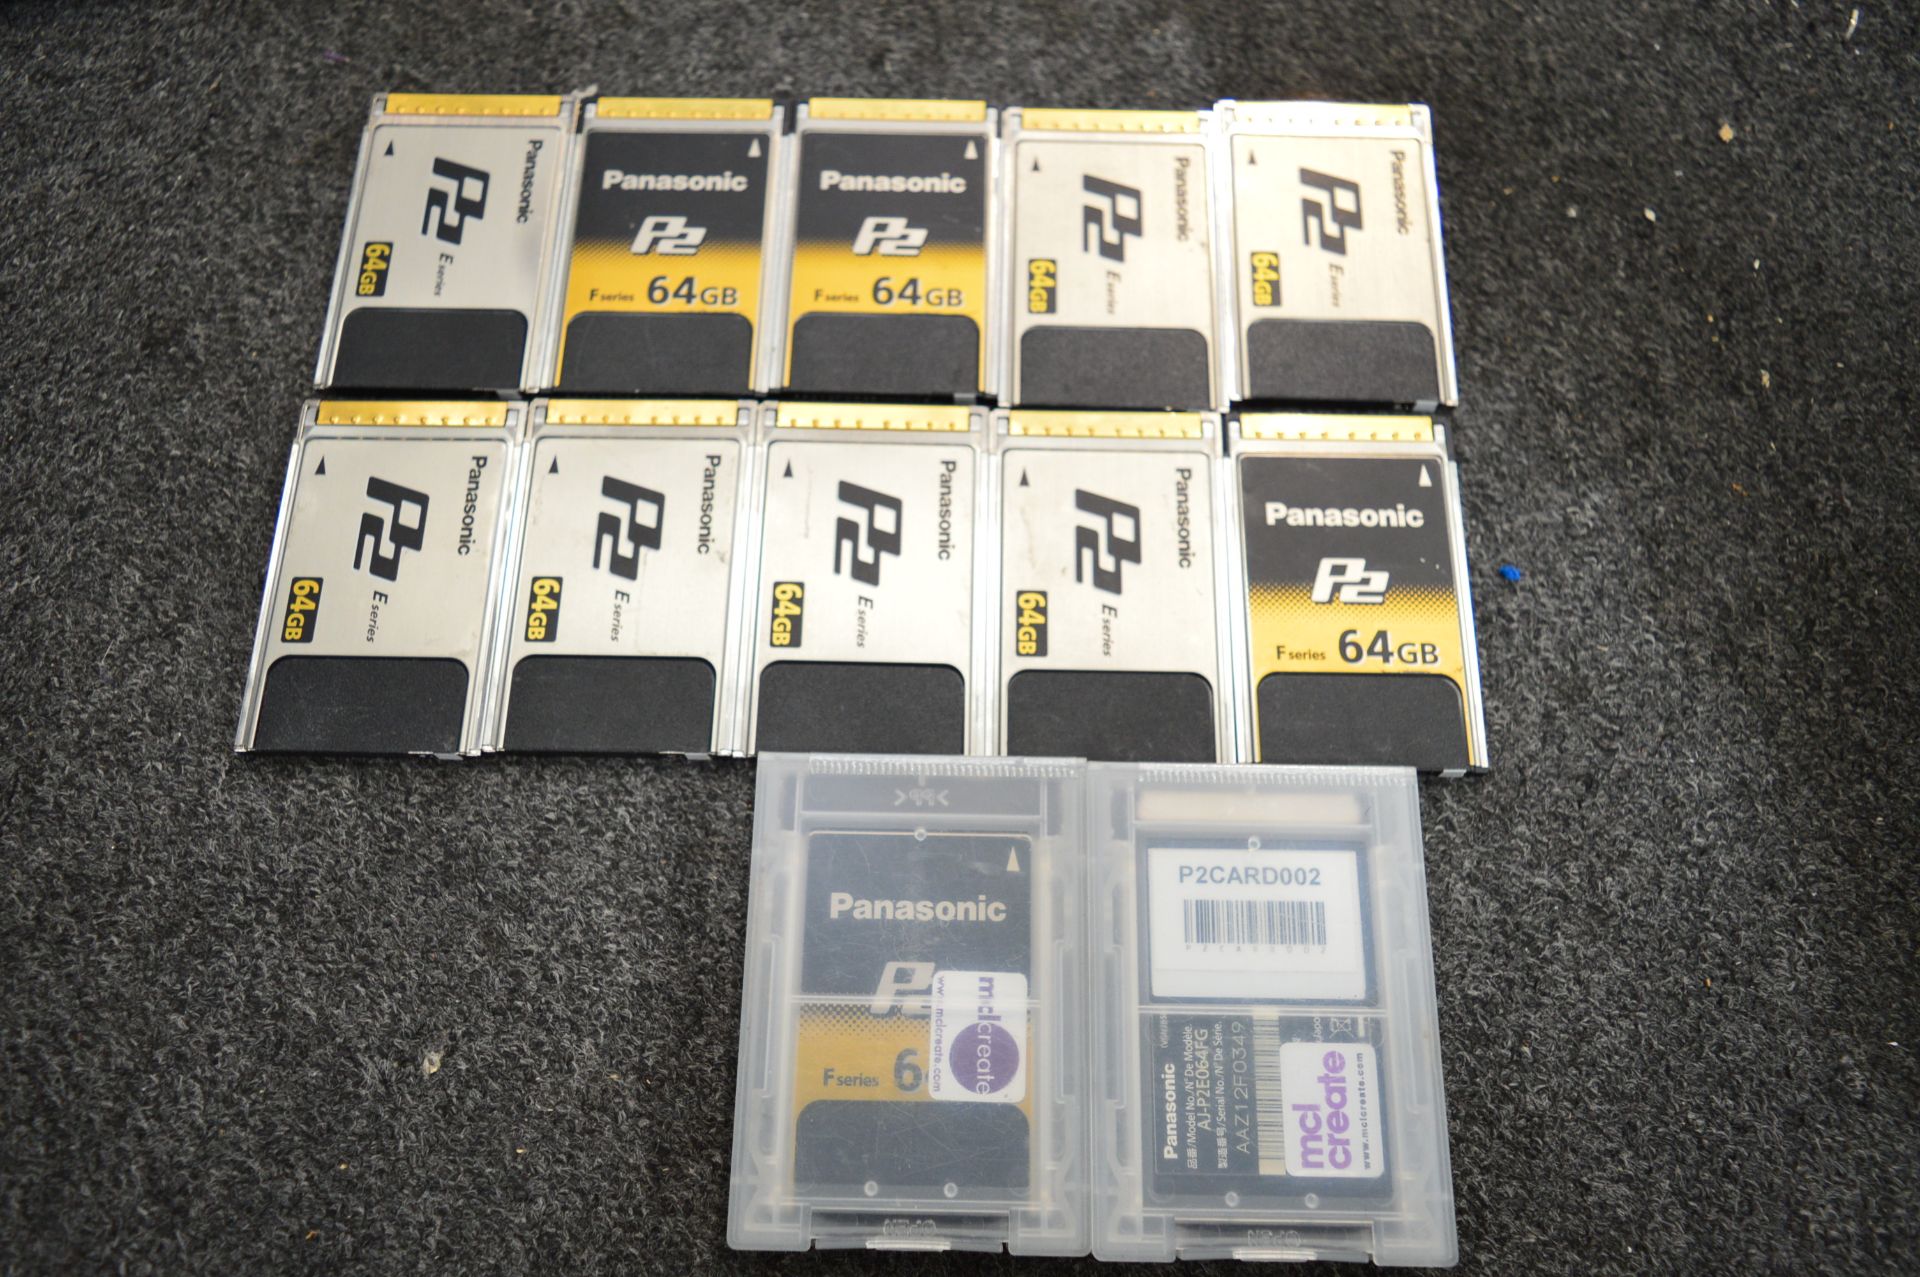 2x No. Panasonic, AJ-PCD2G P2 card readers, DOM 20 - Image 2 of 3